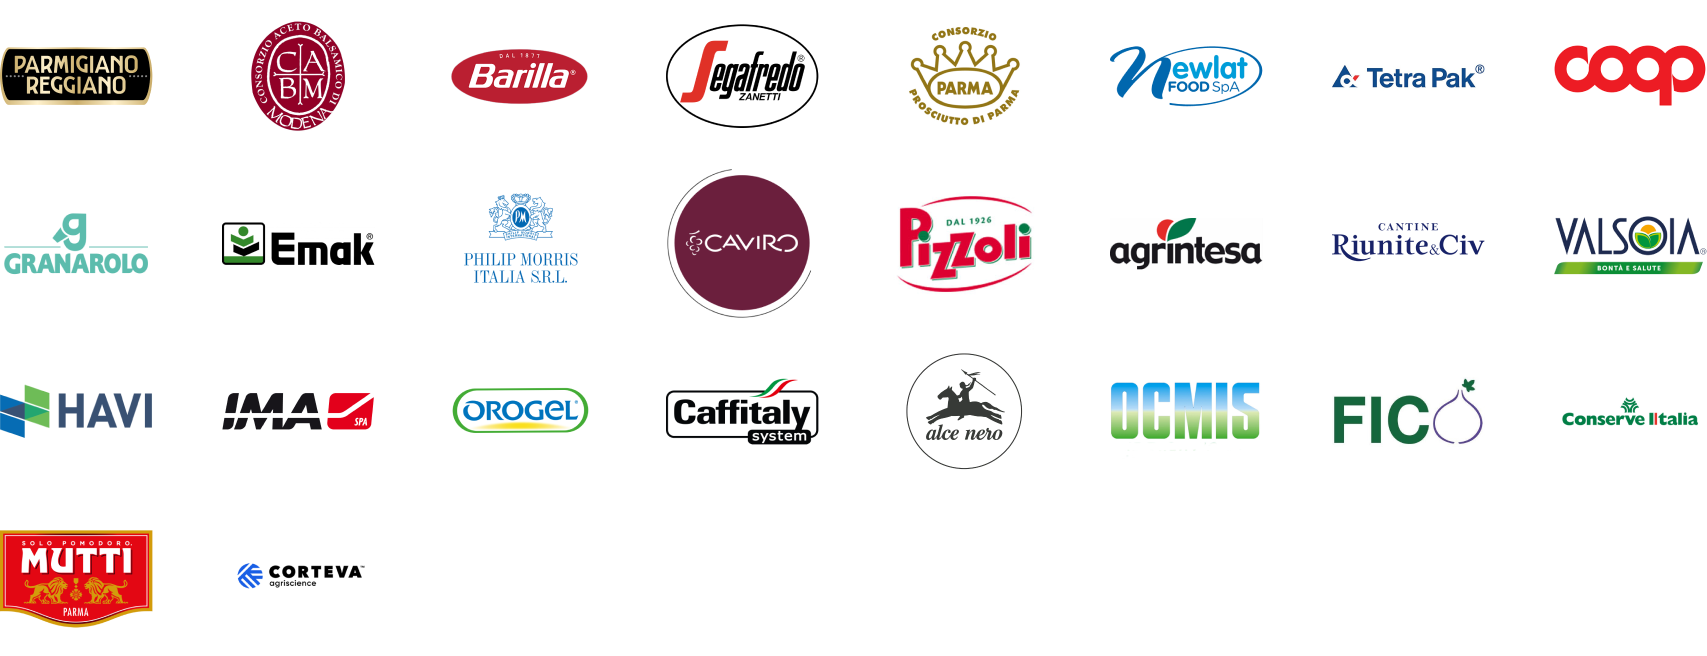 Top companies in Emilia Romagna food valley